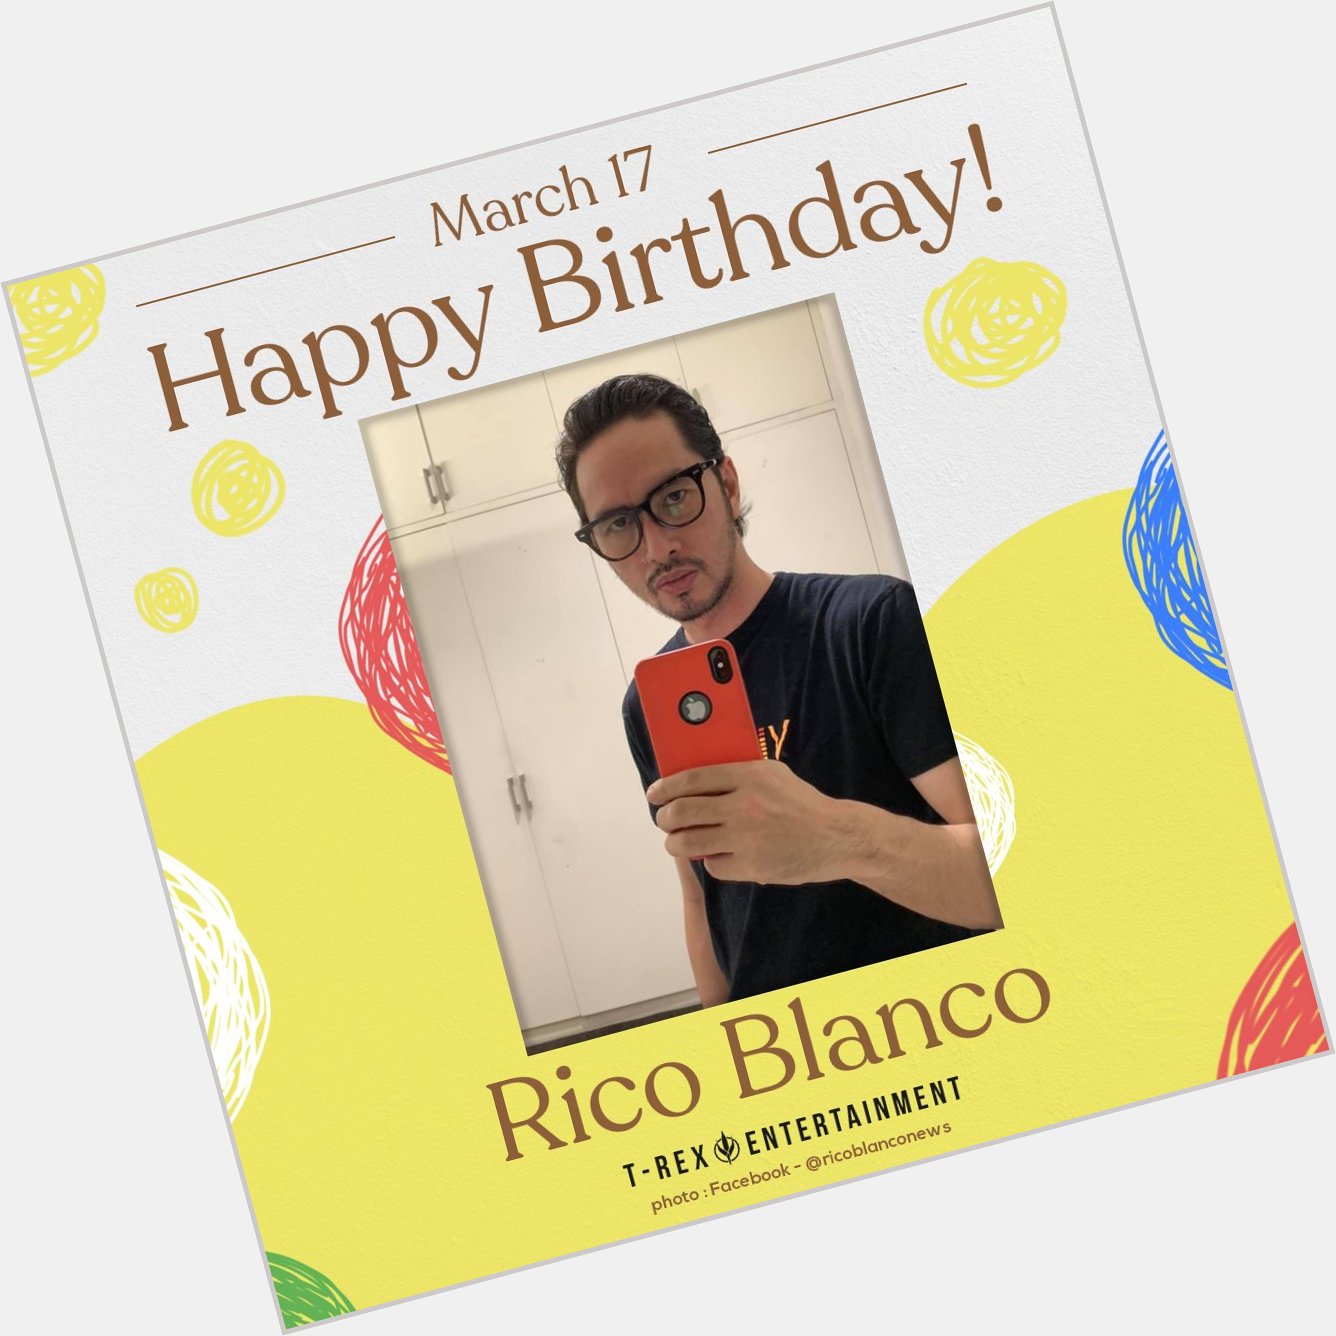 Happy 47th birthday, Rico Blanco!

Trivia: His full name is Rico Rene Granados Blanco. 